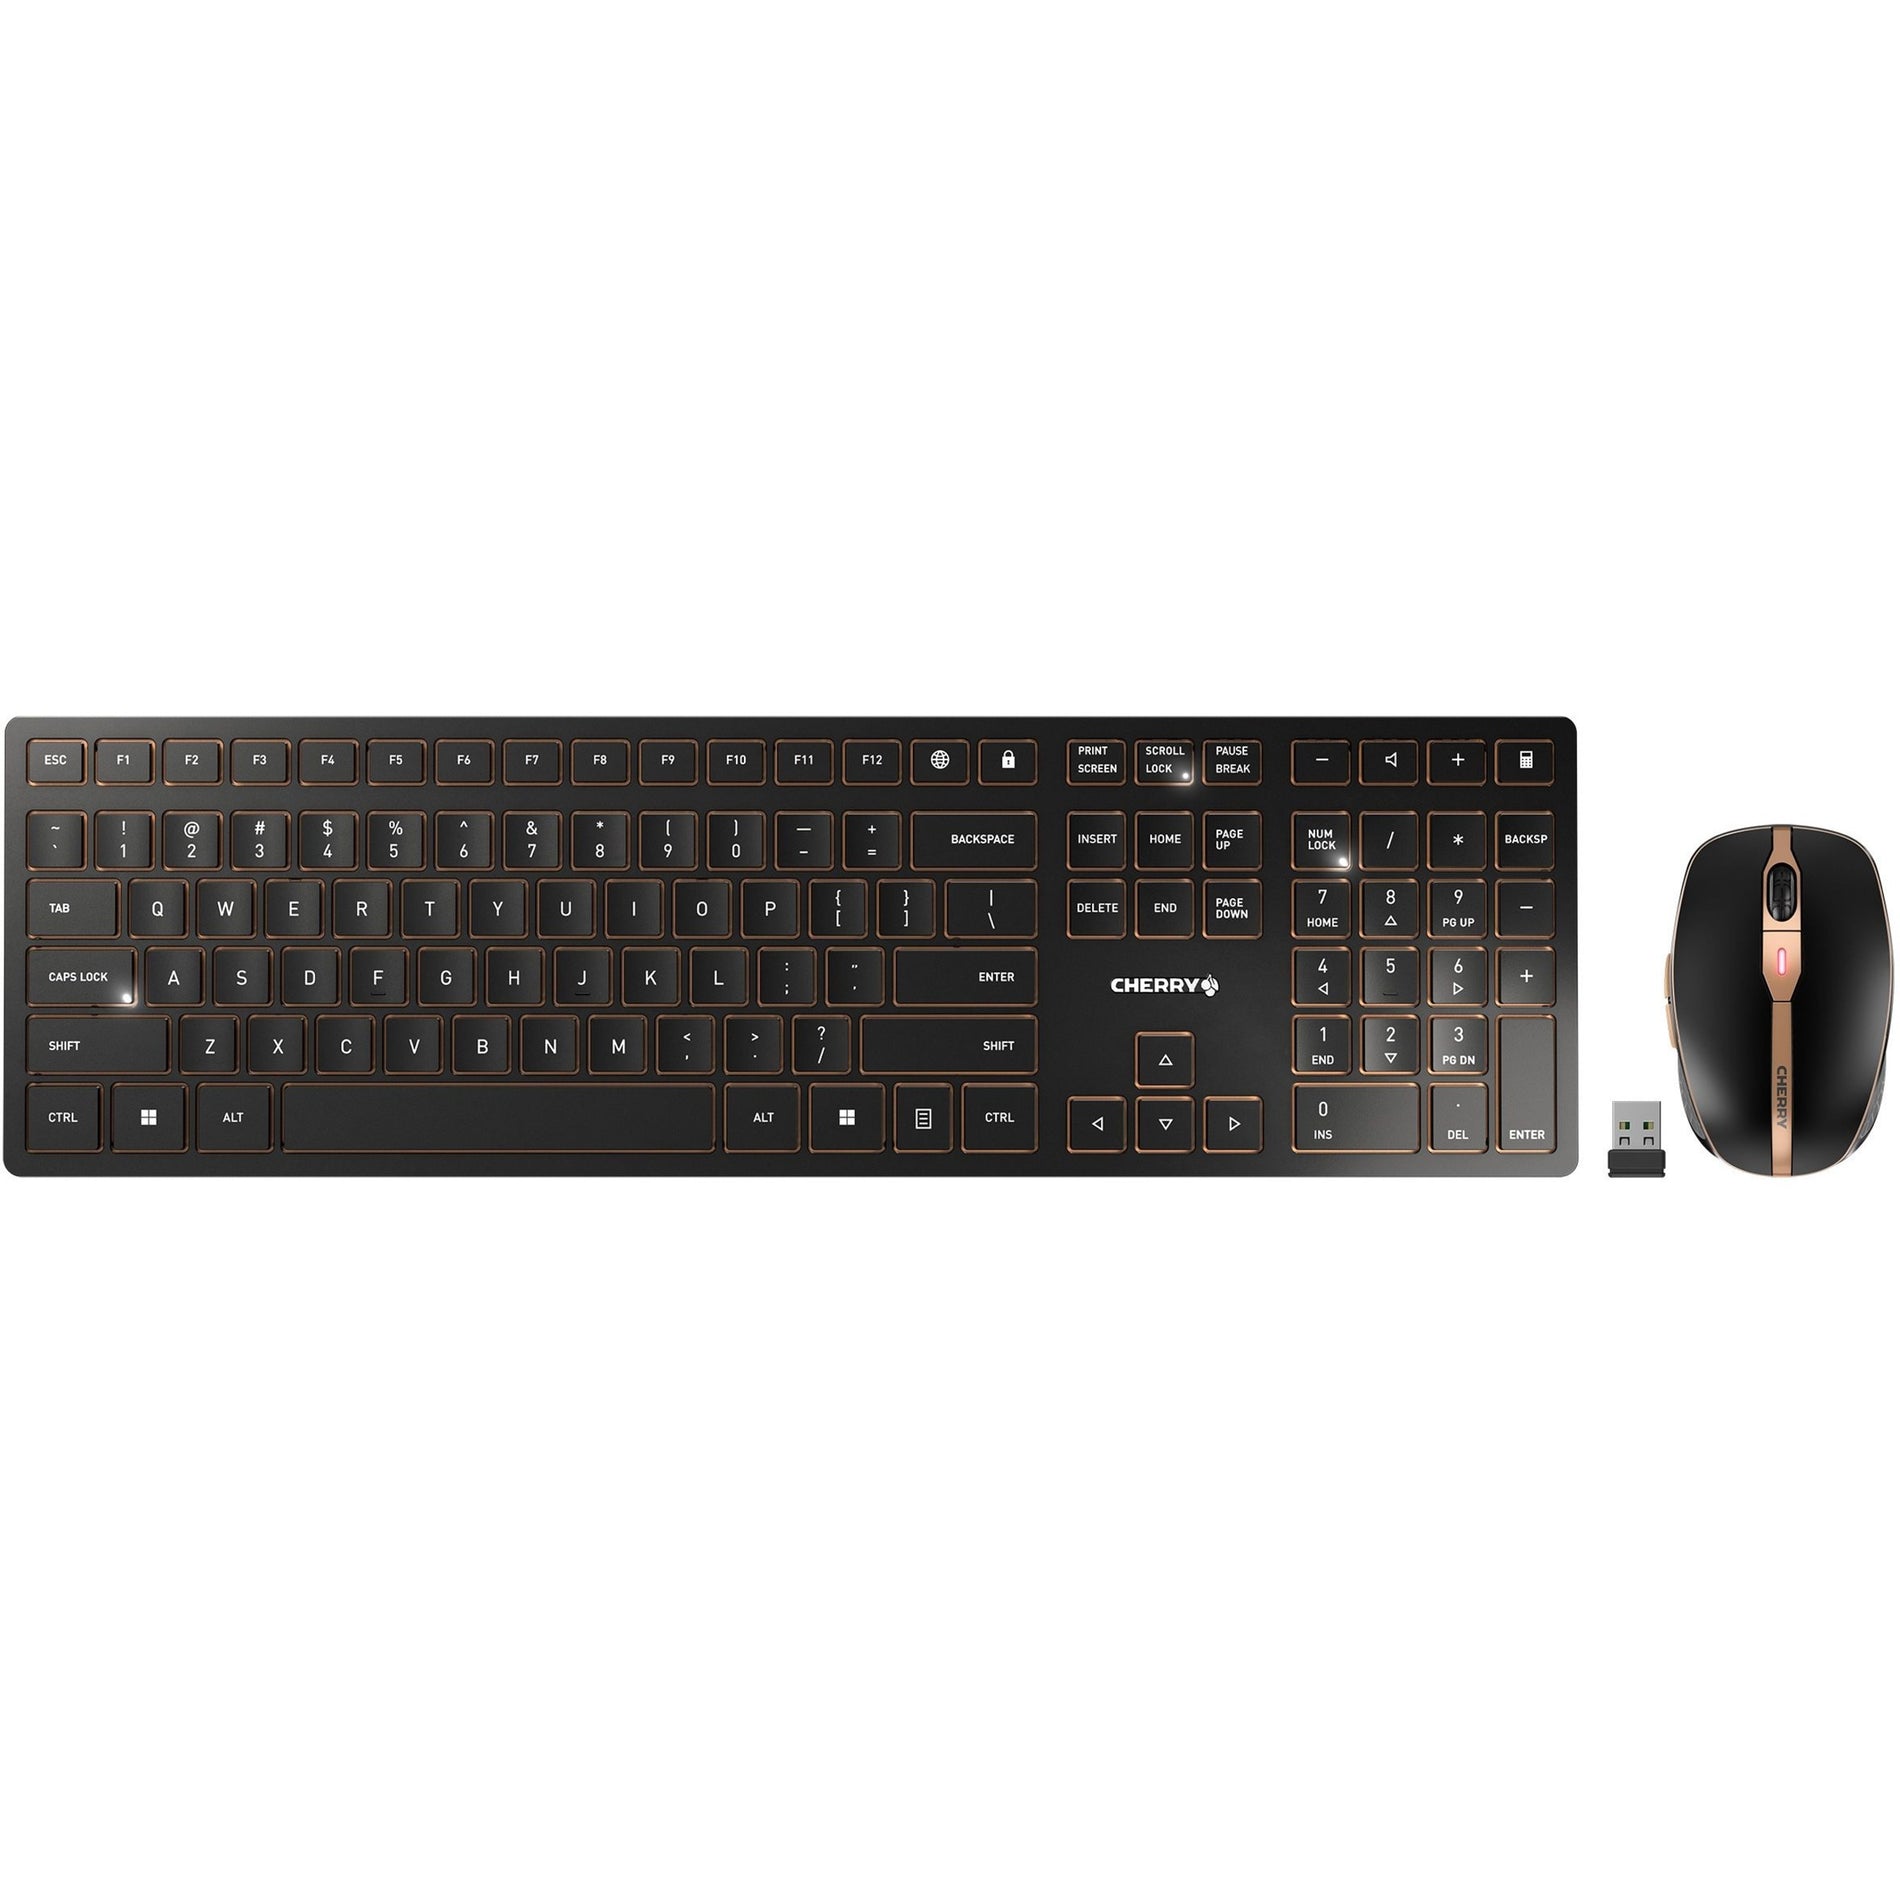 CHERRY JD-9100US-2 DW 9100 SLIM Rechargeable Wireless Desktop Keyboard & Mouse Combo, Black/Bronze, USB